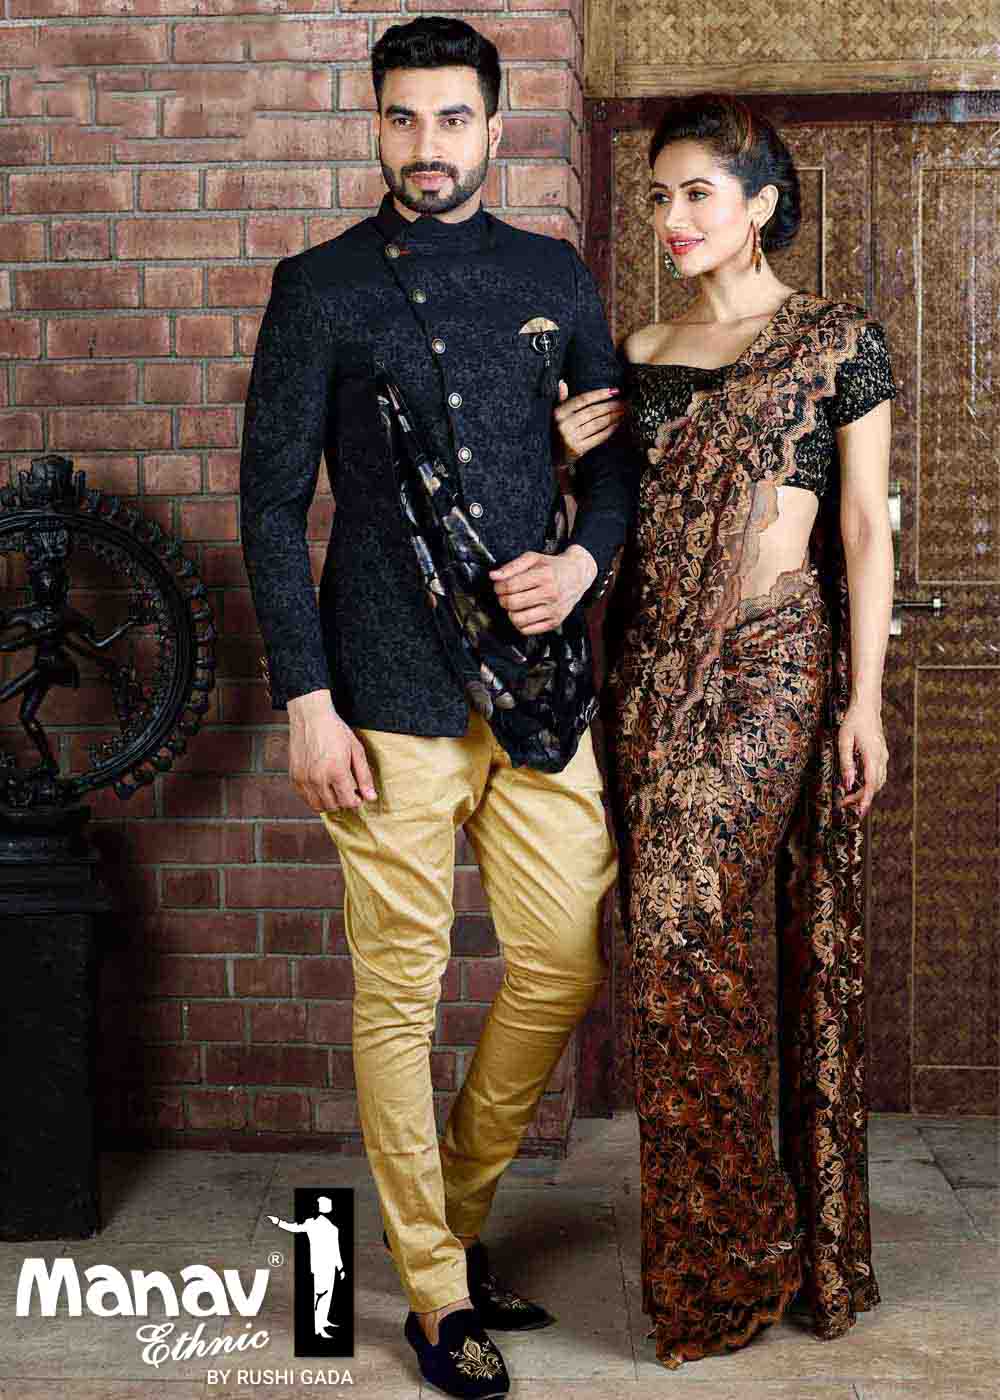 Jodhpuri Suits - Designer Jodhpuri Suit for Men